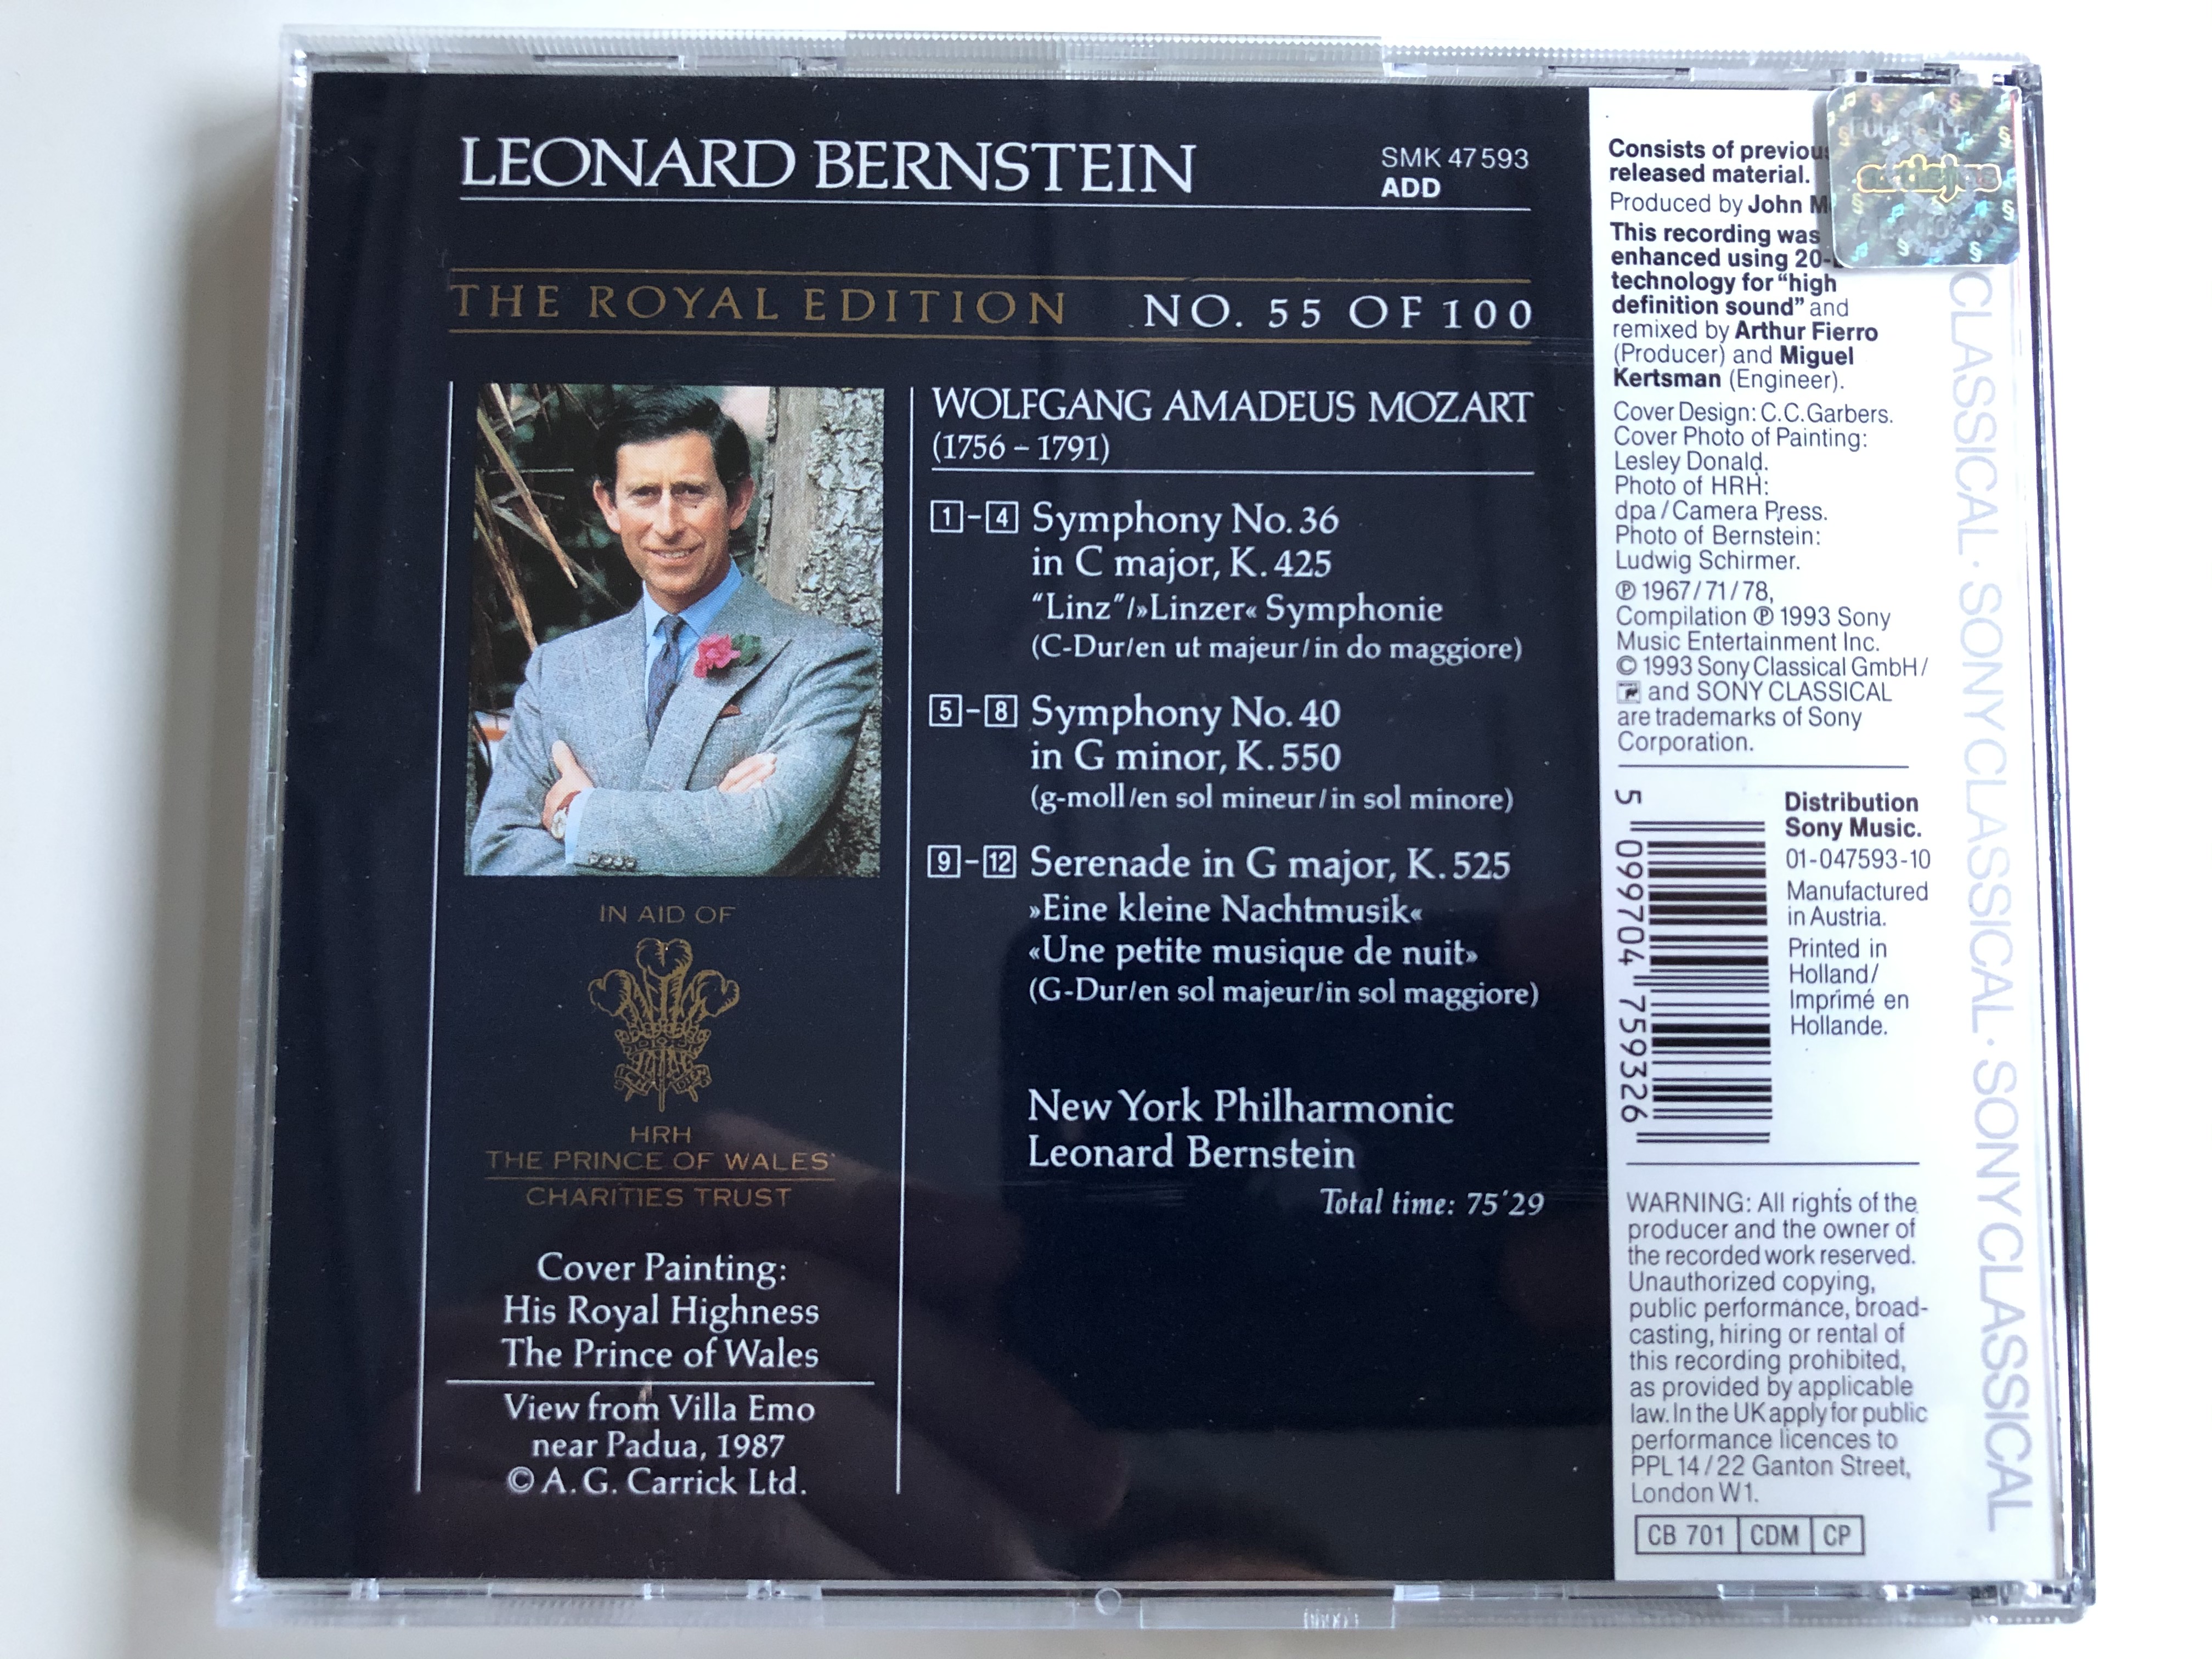 leonard-bernstein-mozart-symphony-no.-36-linz-symphony-no.-40-eine-kleine-nachtmusik-new-york-philharmonic-the-royal-edition-painting-by-h.r.h.-the-prince-of-wales-sony-classical-audio7.jpg